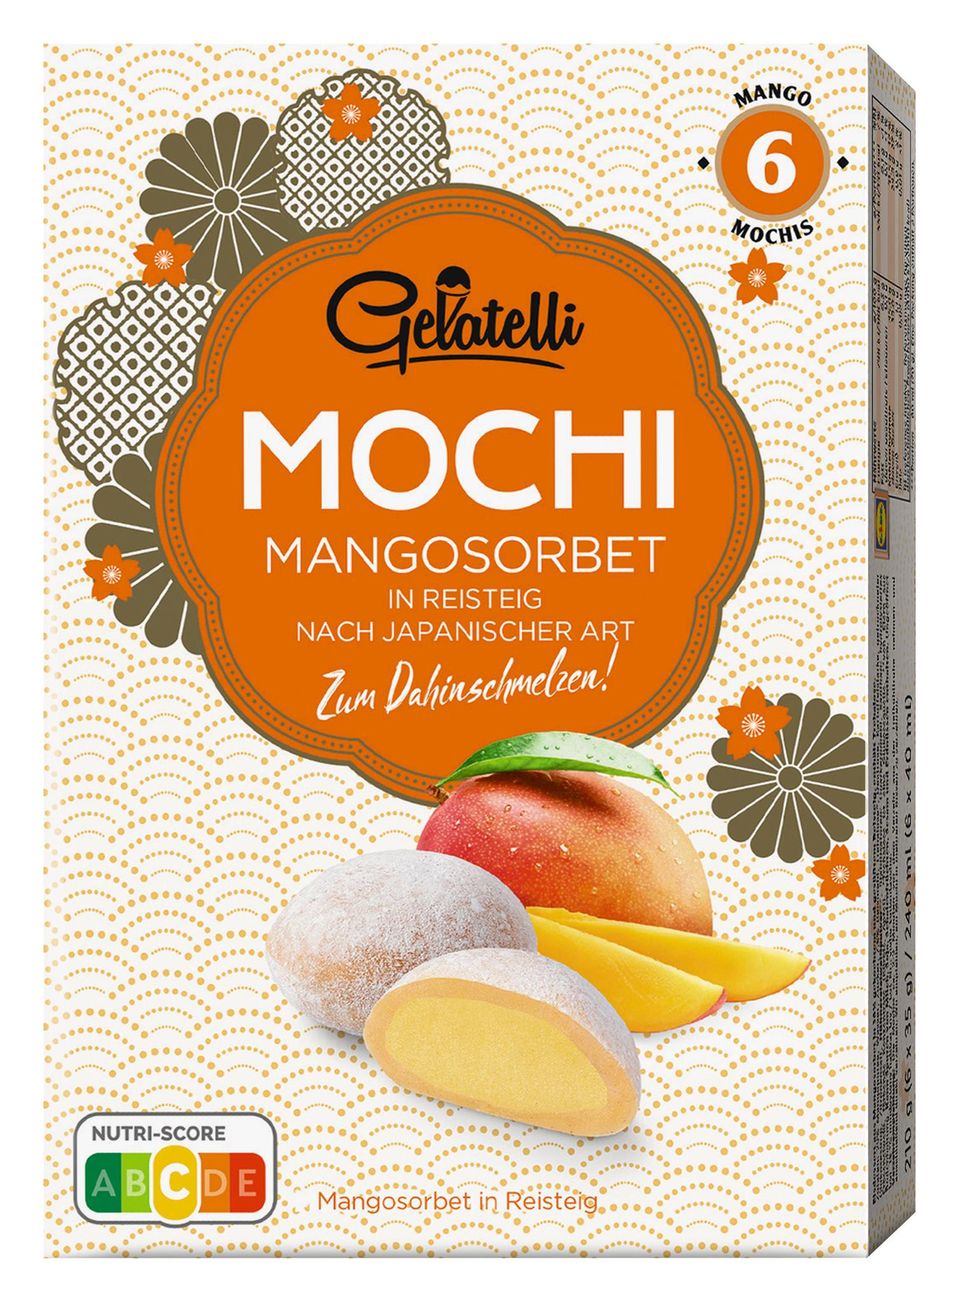 Food-News: Lidl Gelatelli Mochi Mangosorbet